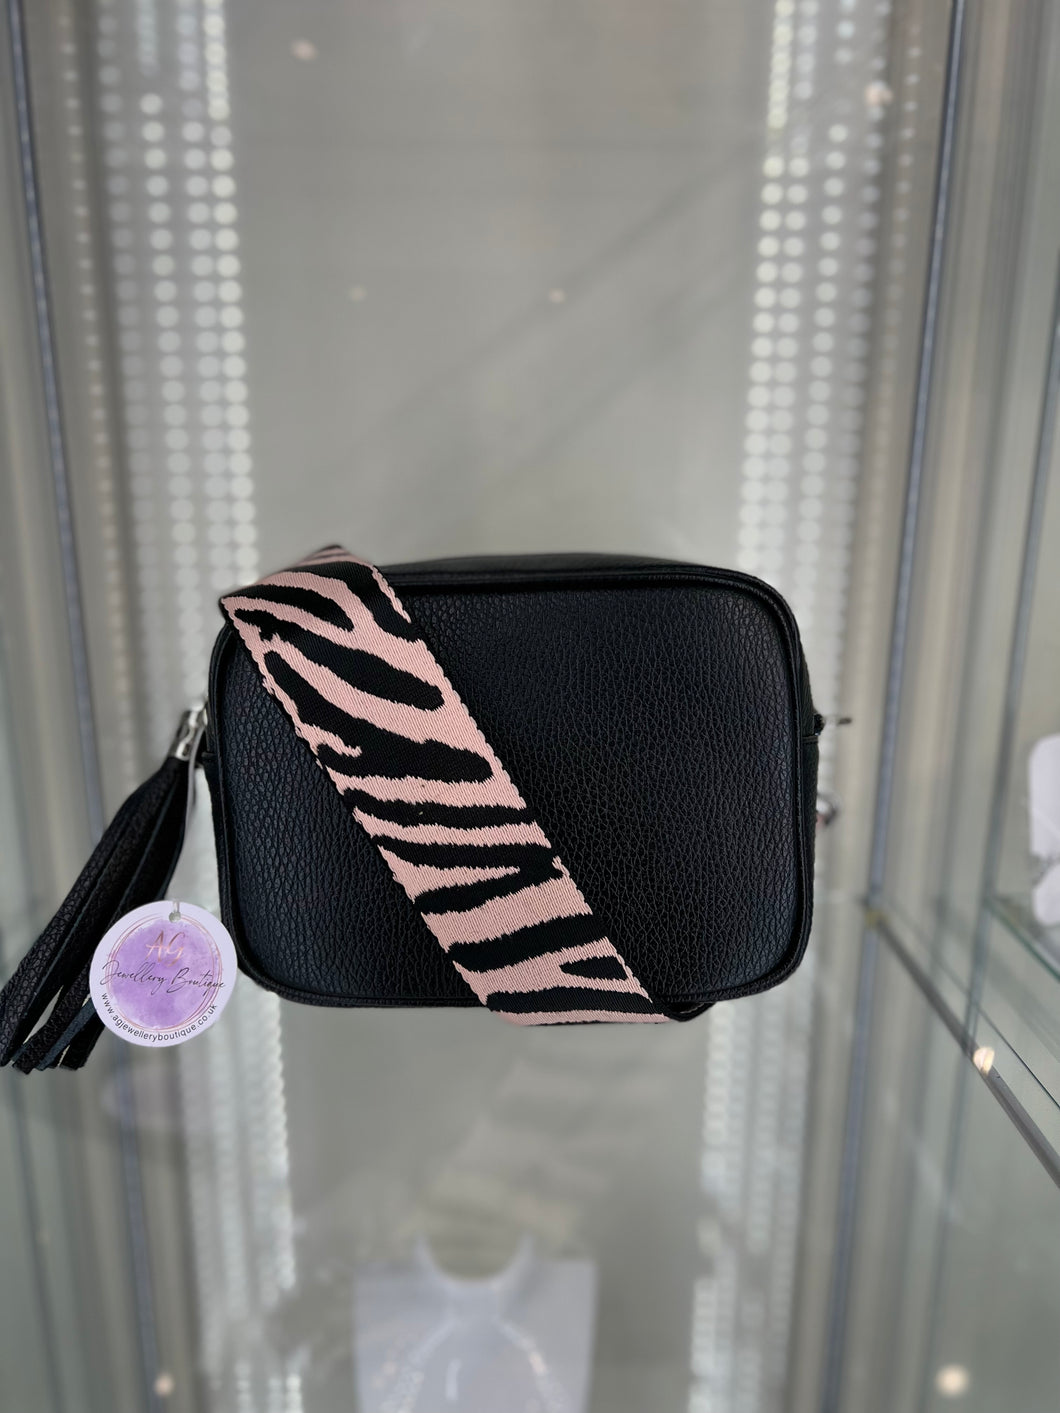 REAL Leather Black Crossbody bag with pink Zebra print Strap